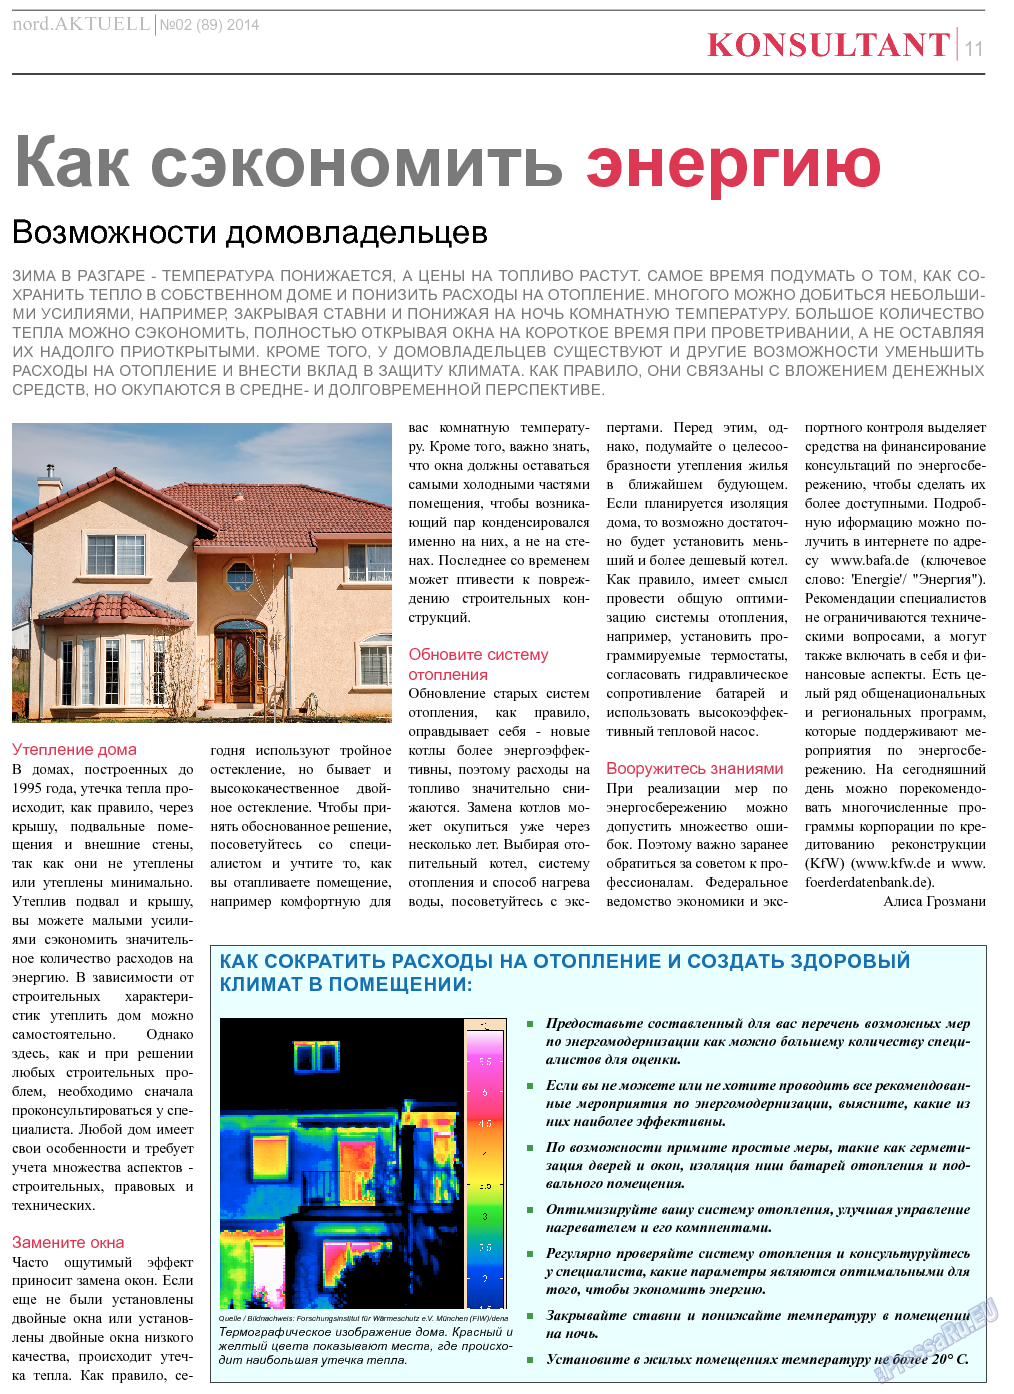 nord.Aktuell, газета. 2014 №2 стр.11